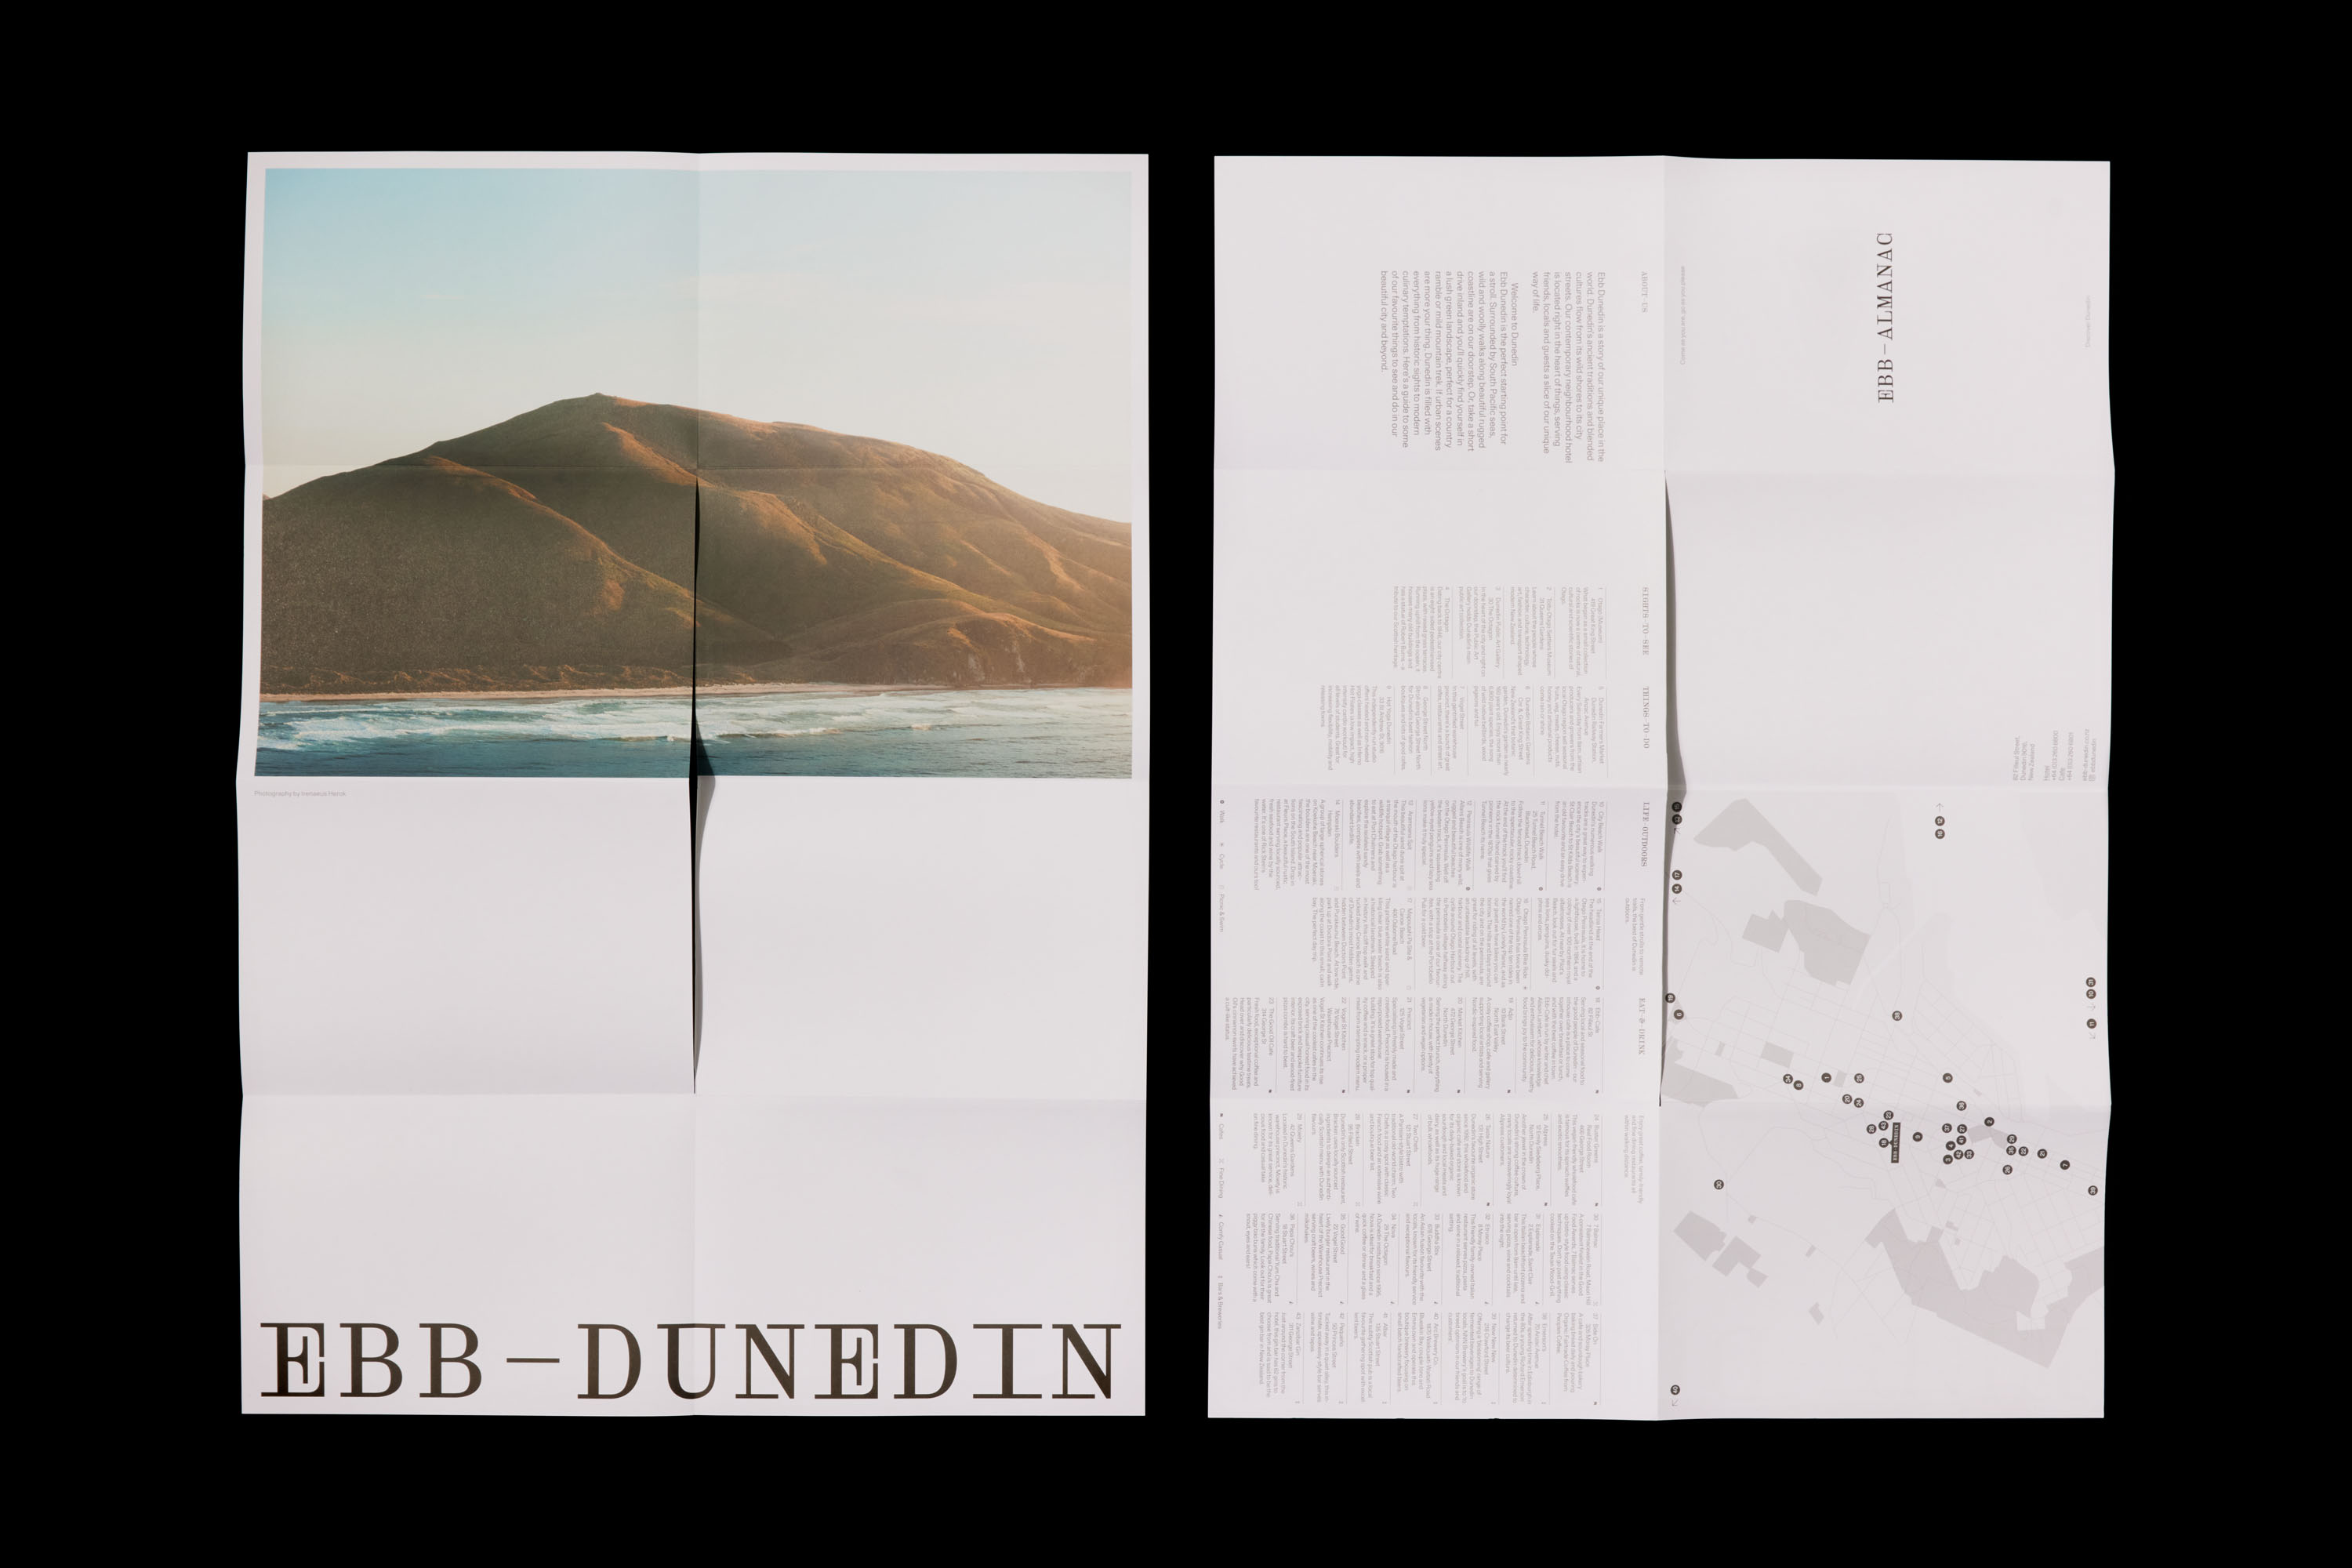 Brand identity designed by Maud for contemporary New Zealand hotel Ebb Dunedin